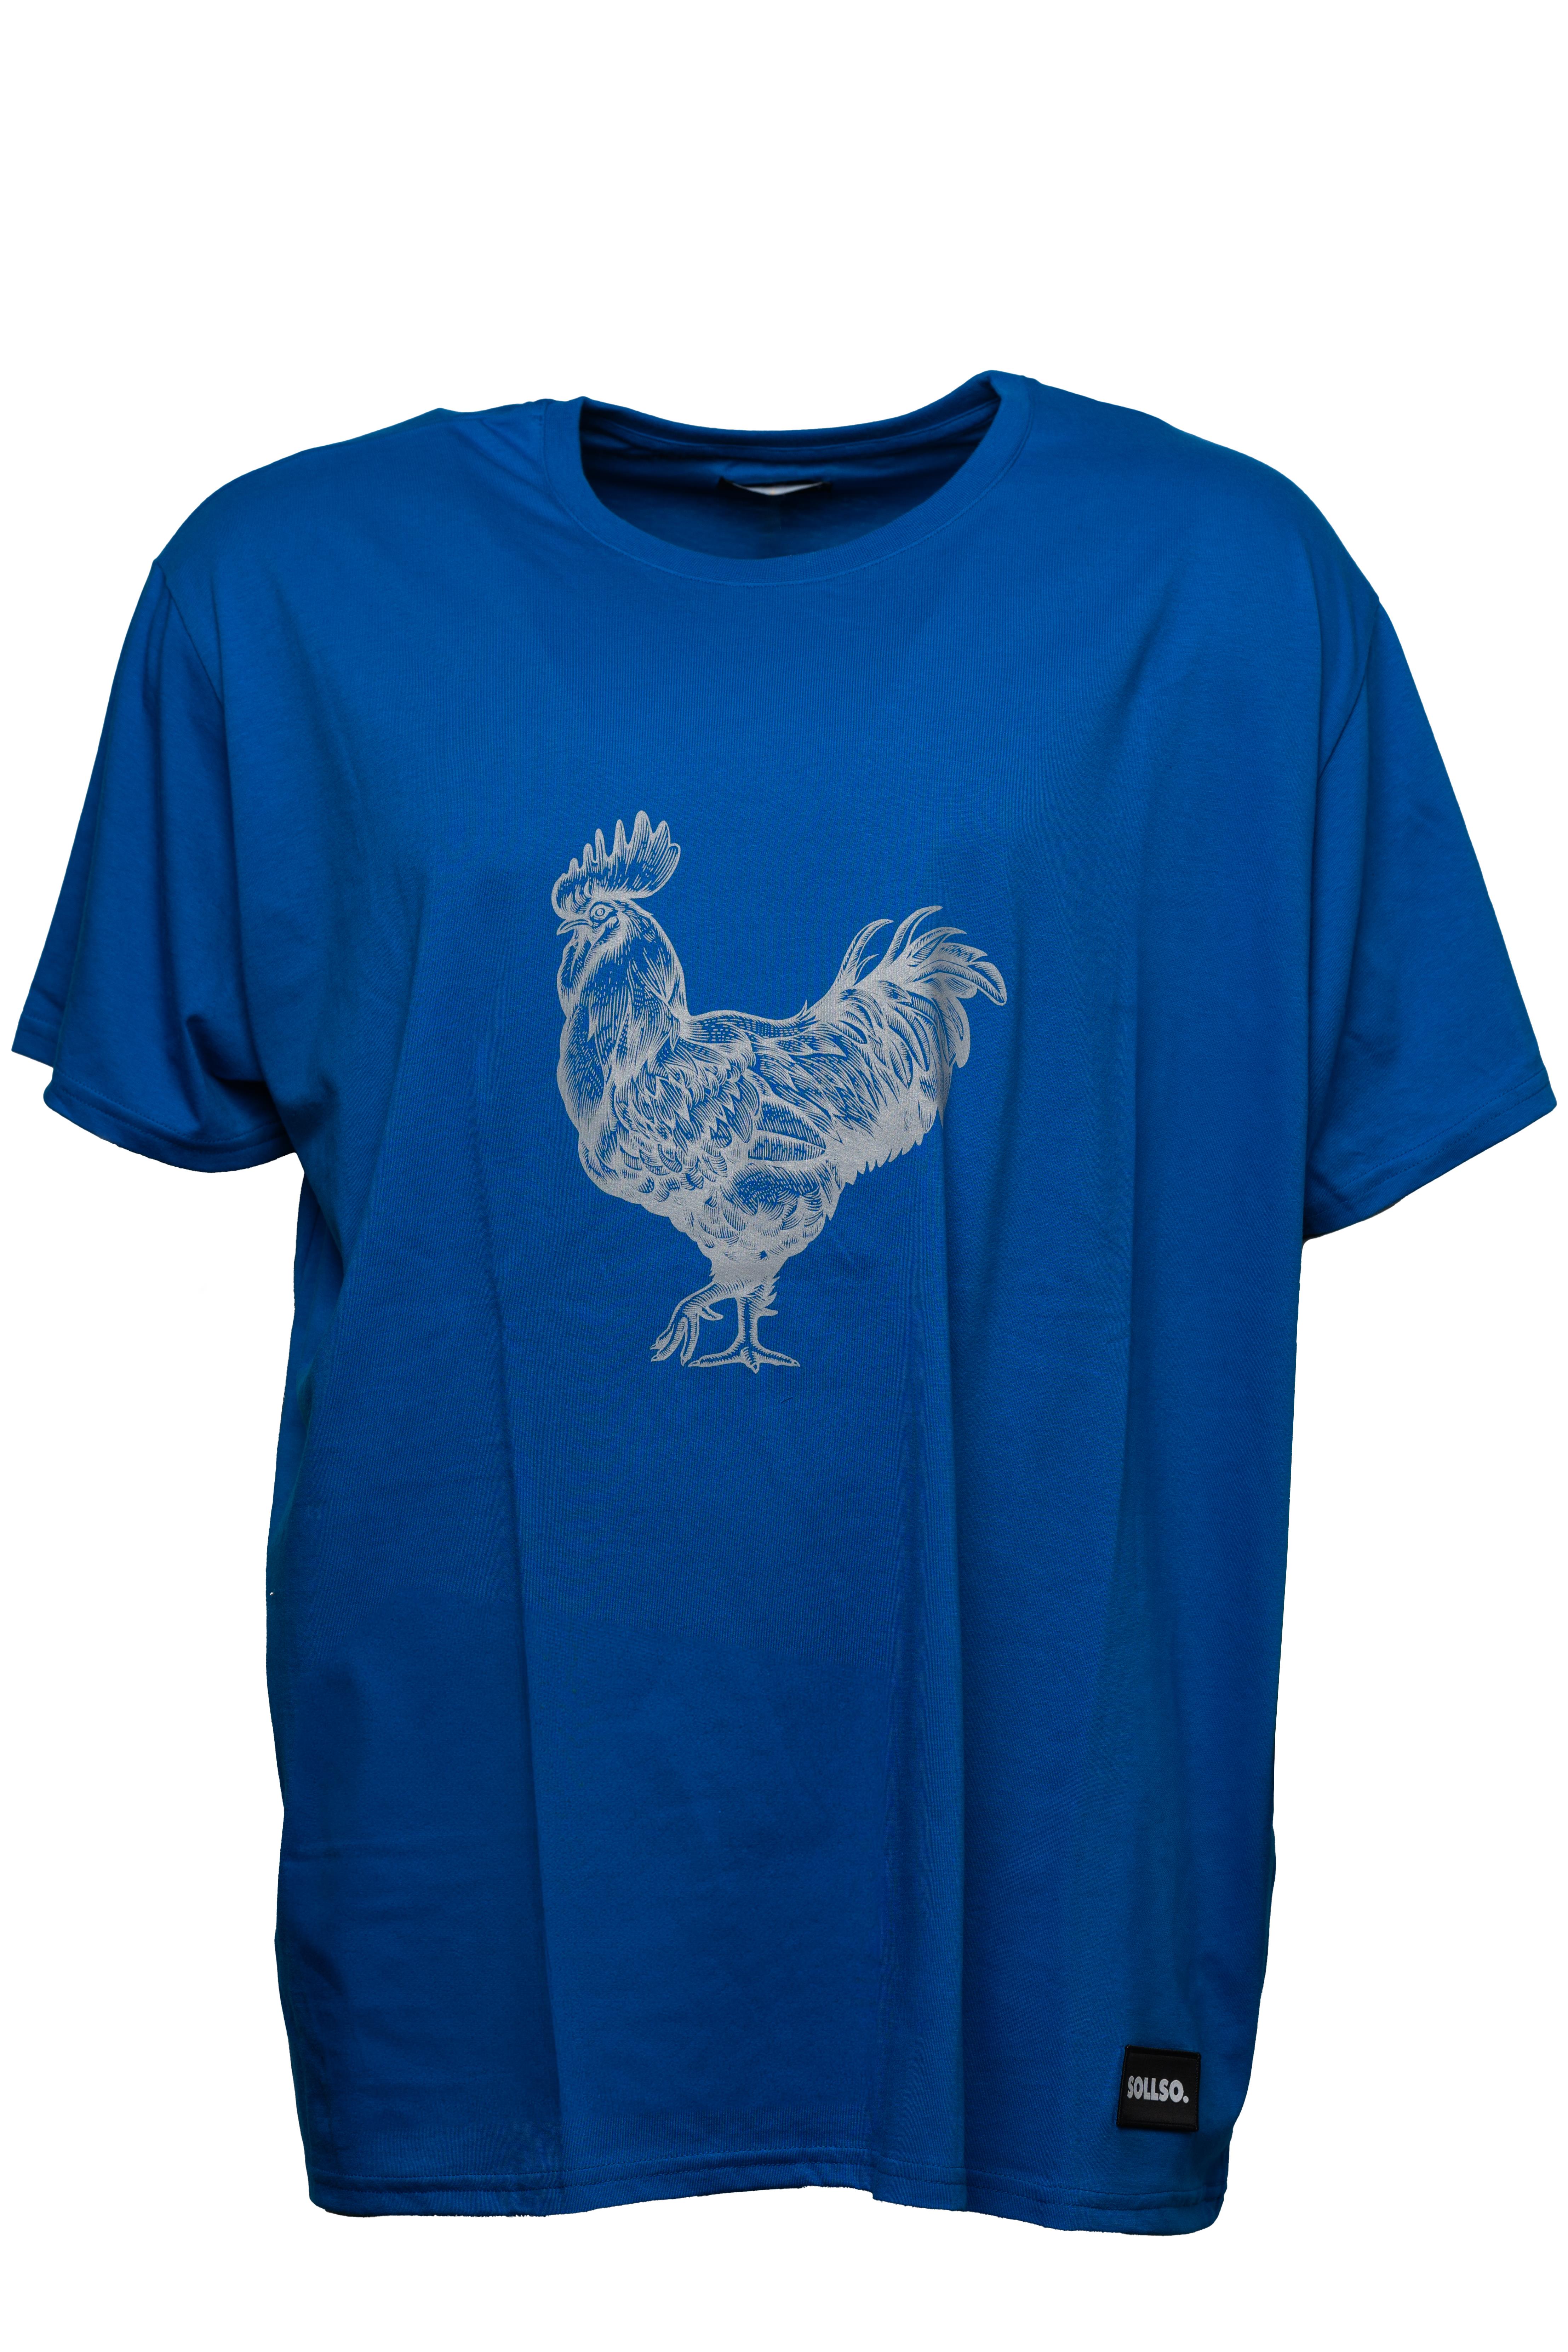 SOLLSO. T-Shirt "Rooster", Farbe Ocean Blue, Größe 8XL